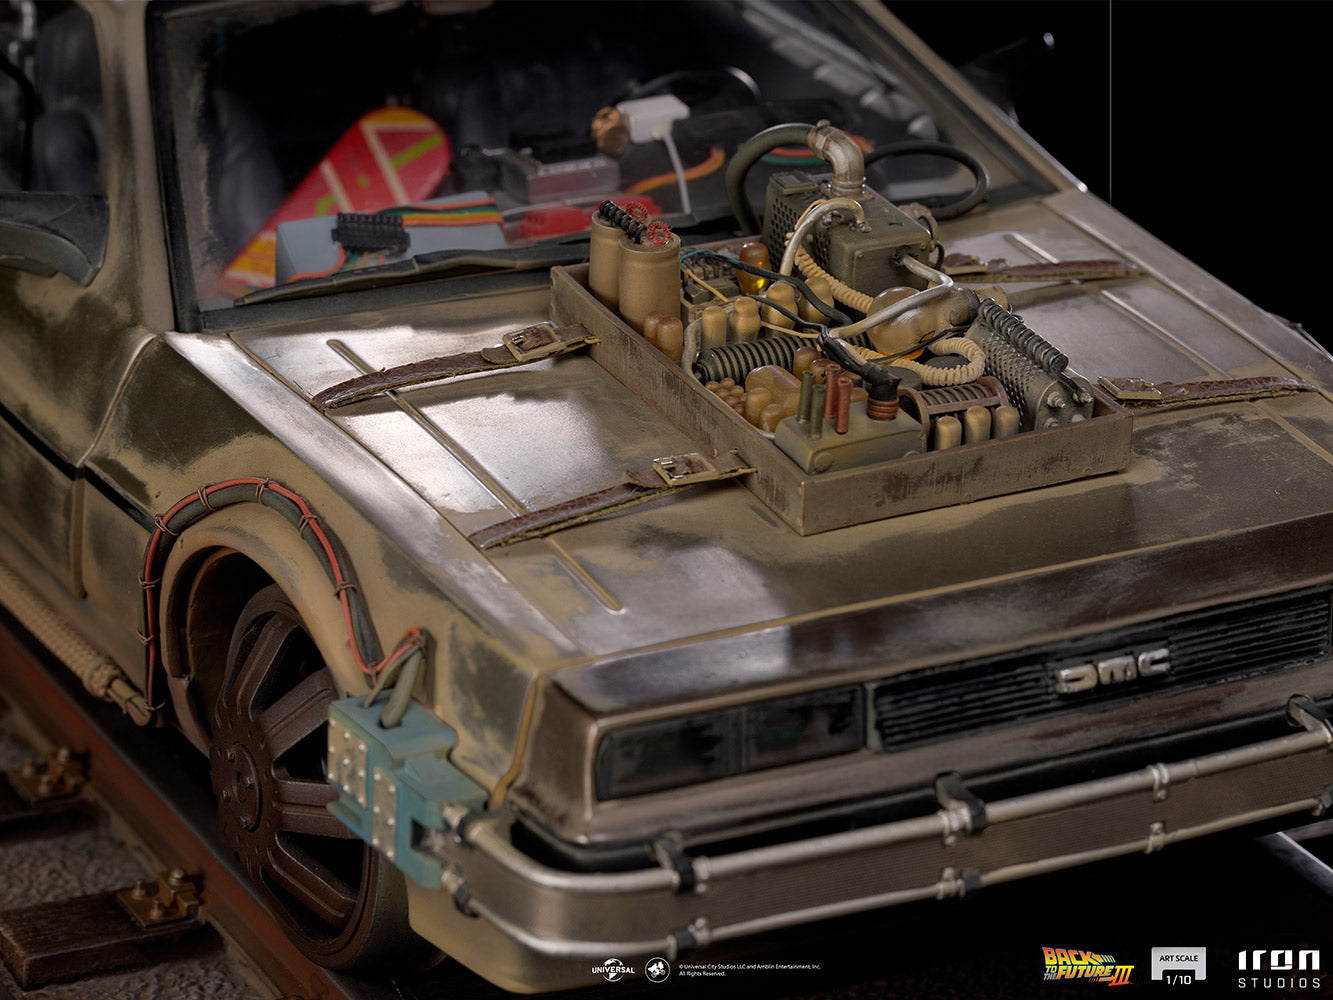 IRON Studios: Volver al Futuro Parte III - DeLorean Escala de Arte 1/10